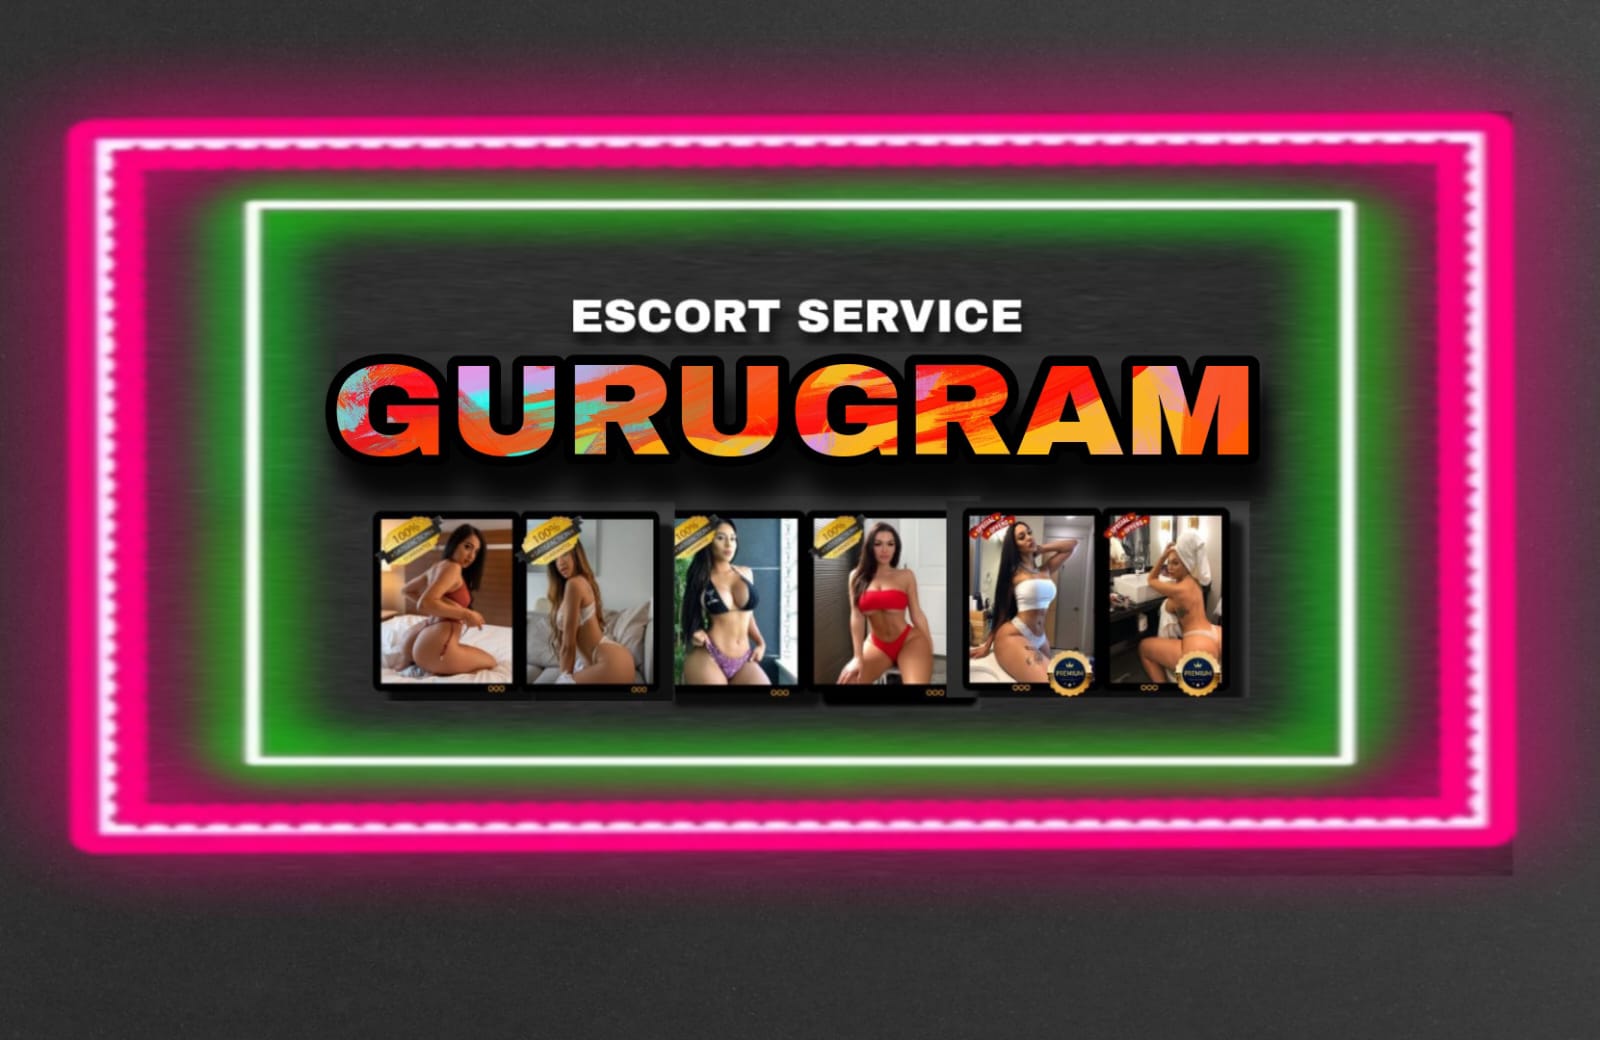 Russian escort in gurugram- escort service in gurugram